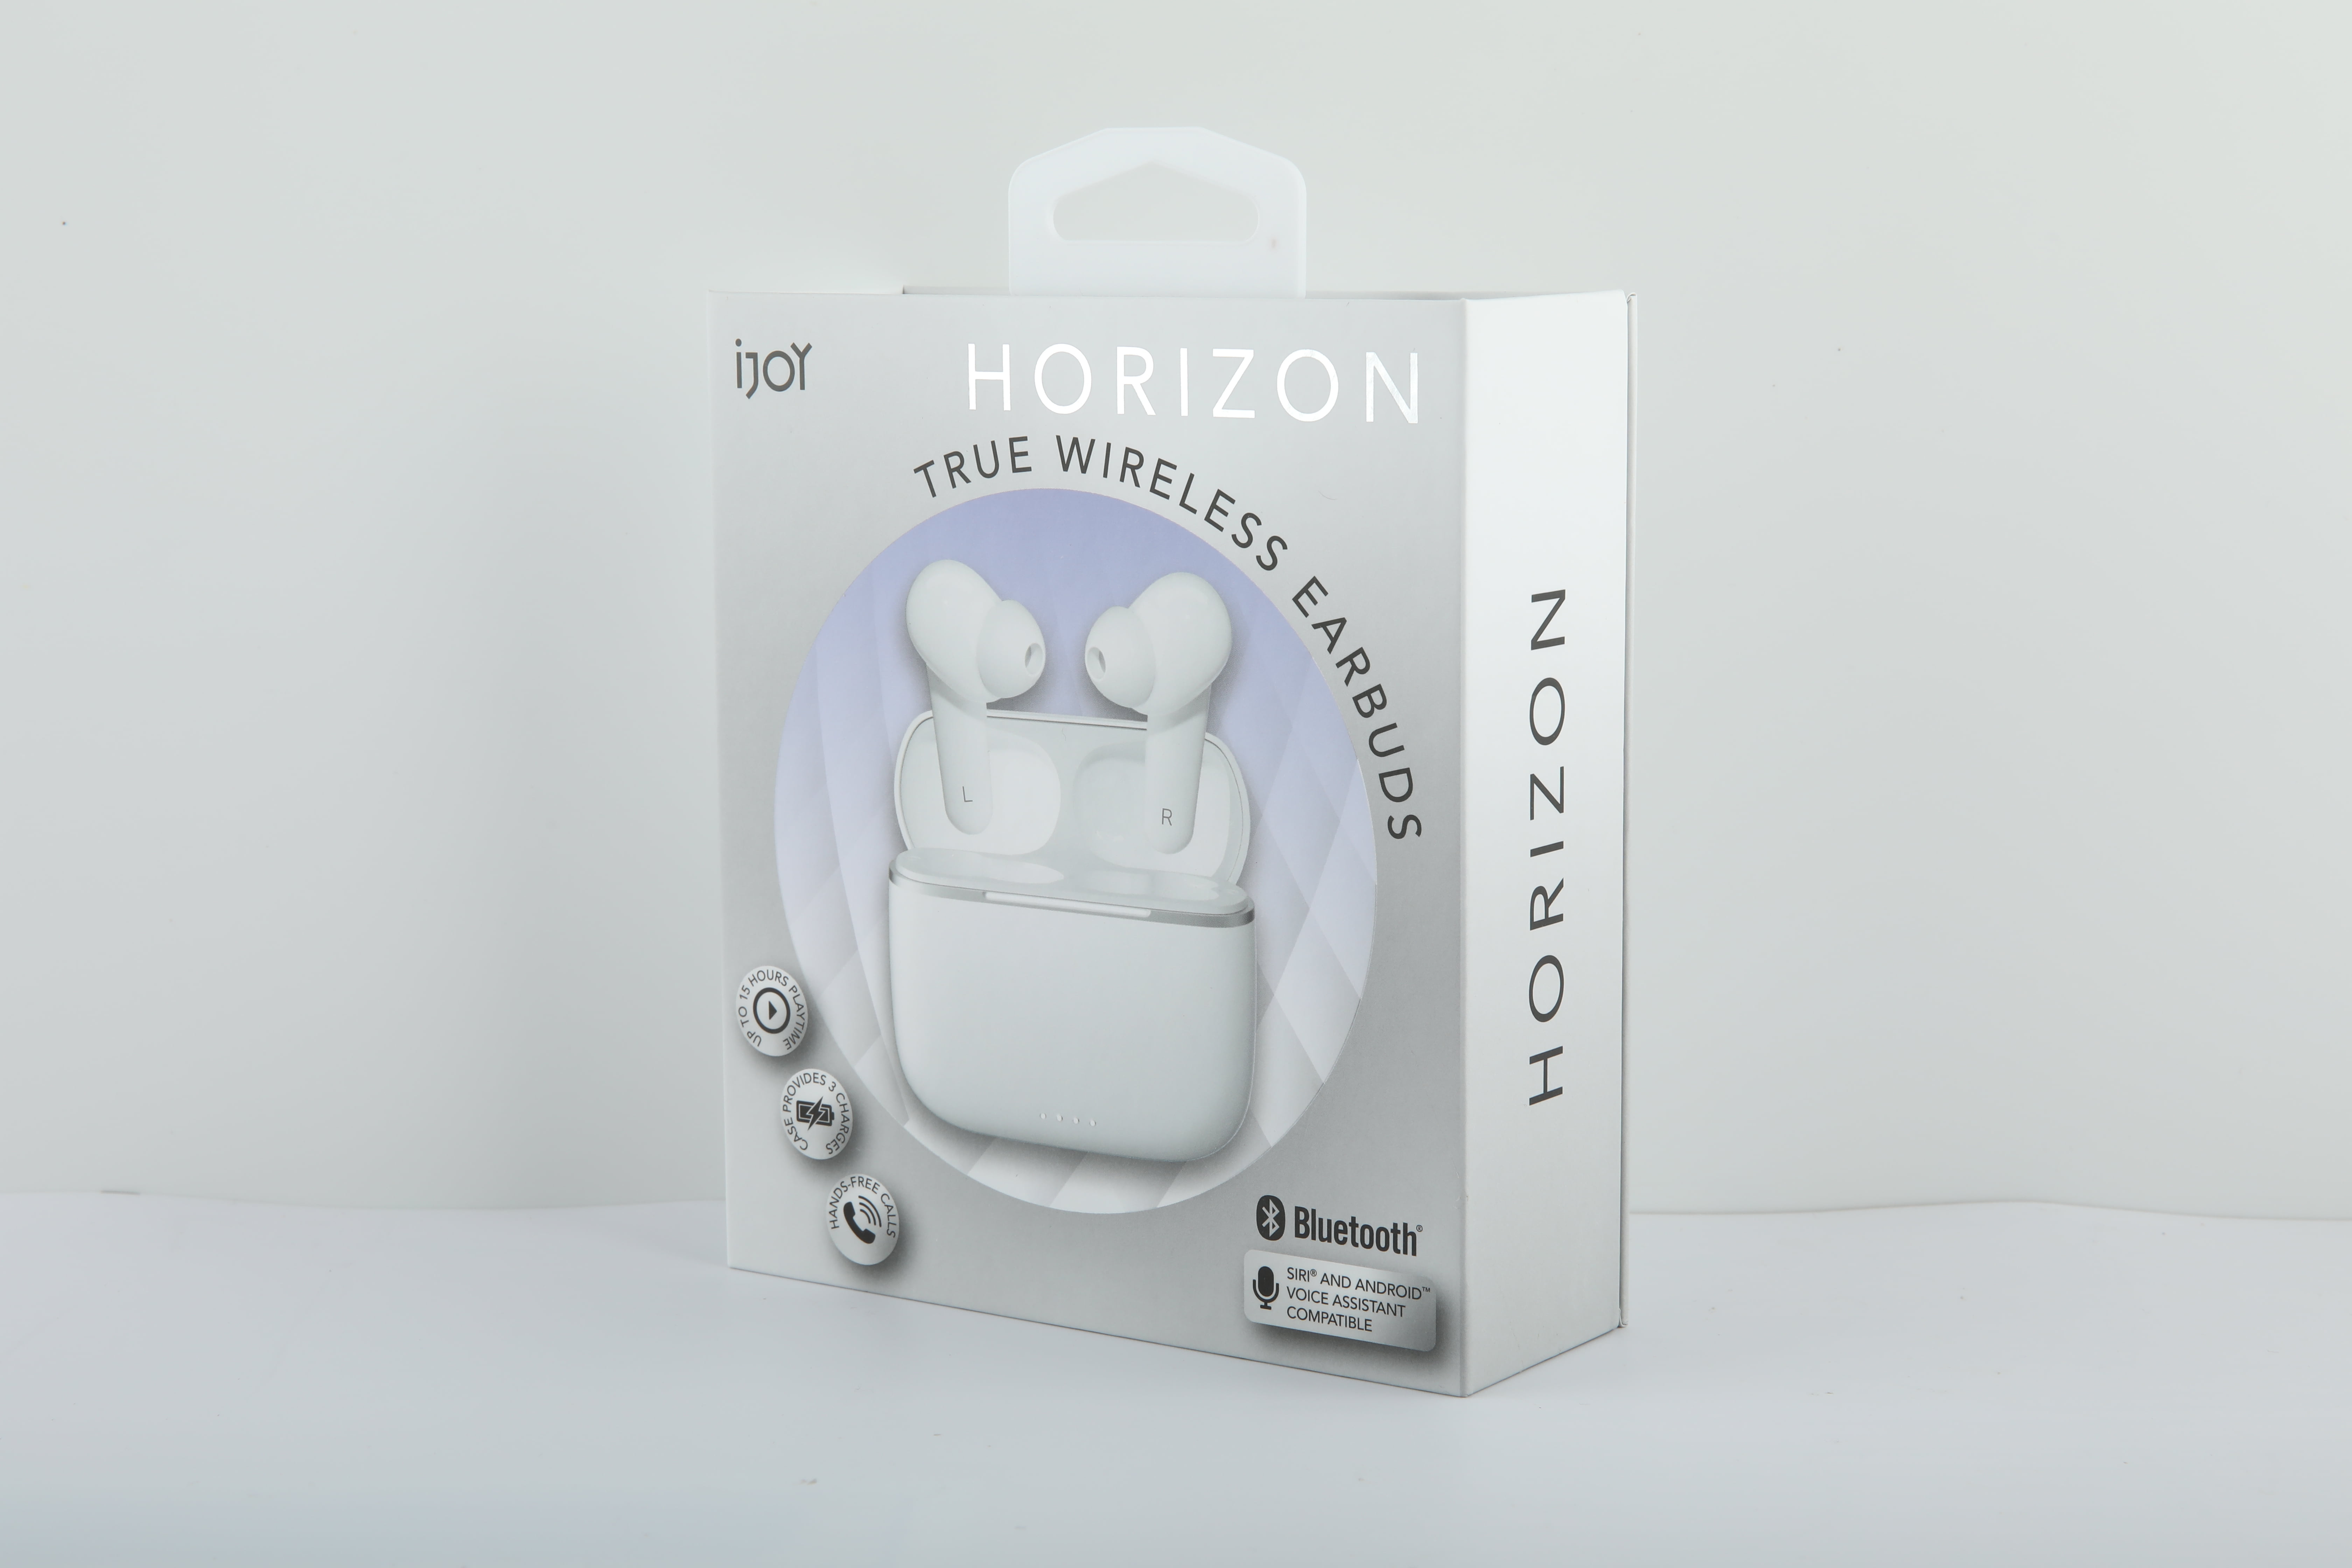 Horizon 2.0 True Wireless Ear Buds - 24 hr